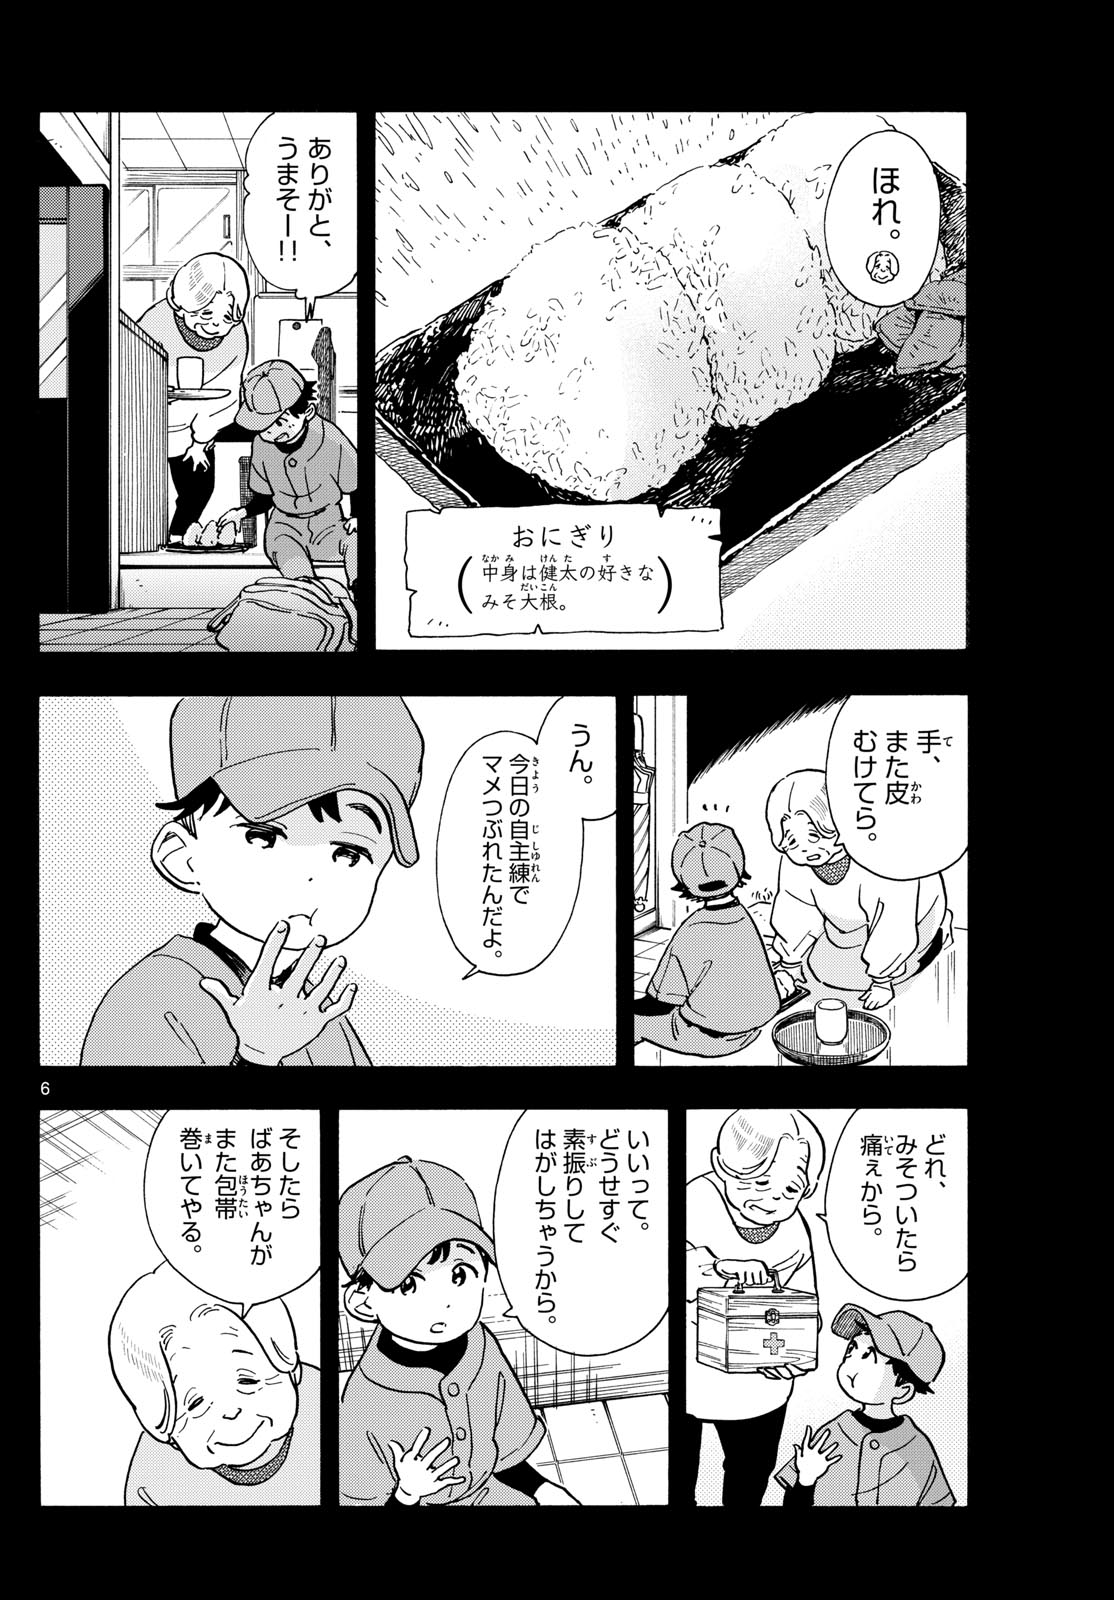 Maiko-san Chi no Makanai-san - Chapter 302 - Page 6